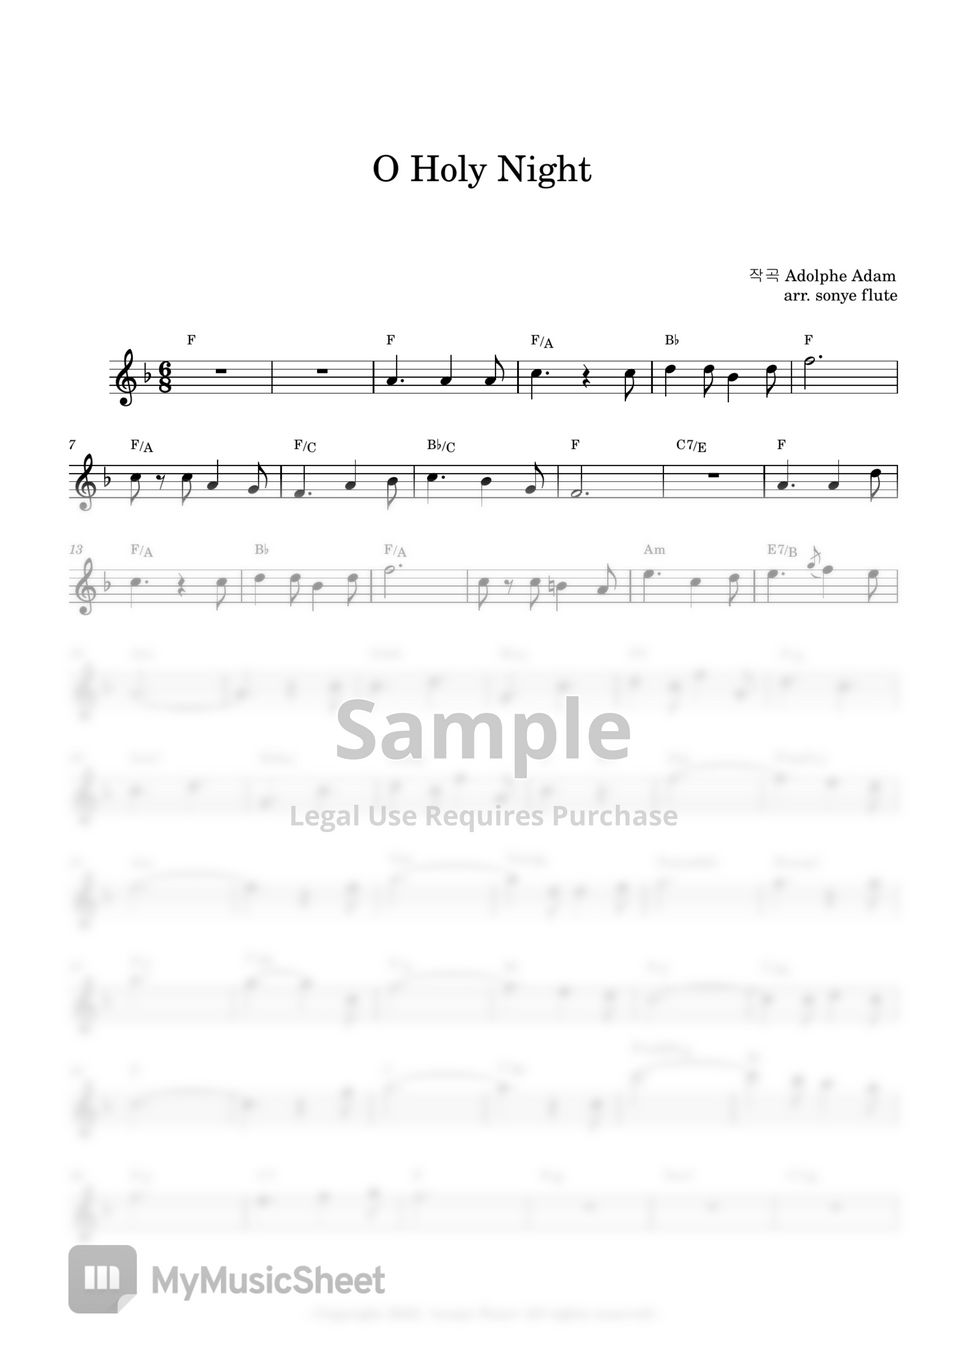 Christmas Carols - O Holy Night (Flute Sheet Music) by sonye flute